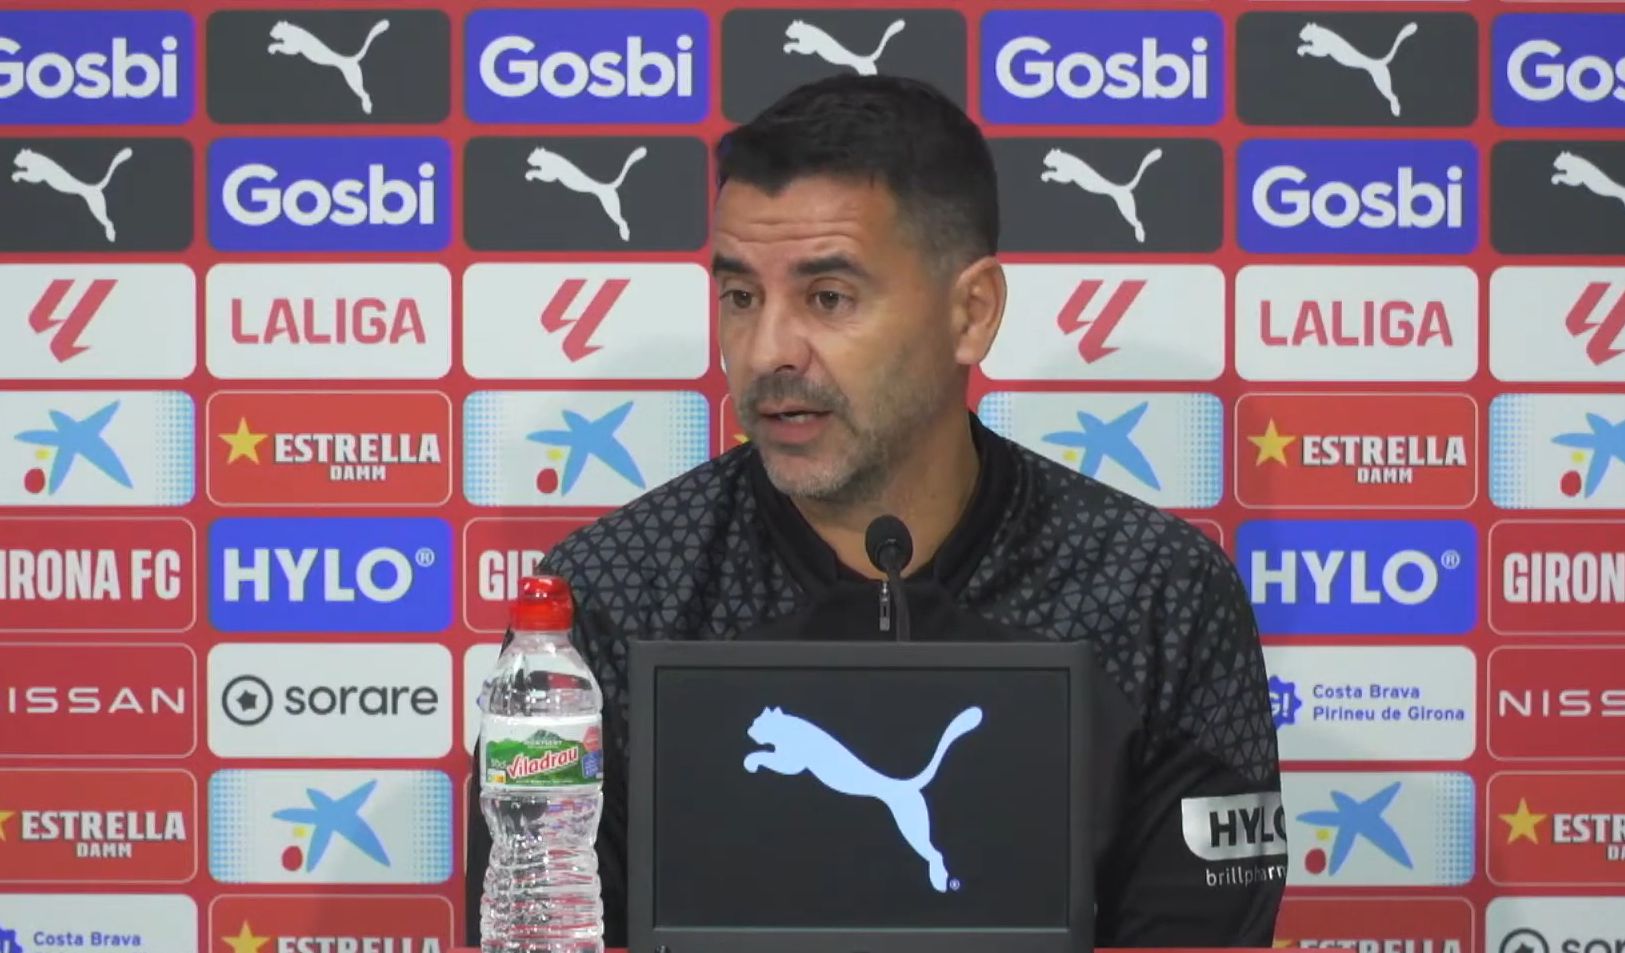 Girona coach Michel Sanchez discusses future next season amid links to Barcelona job